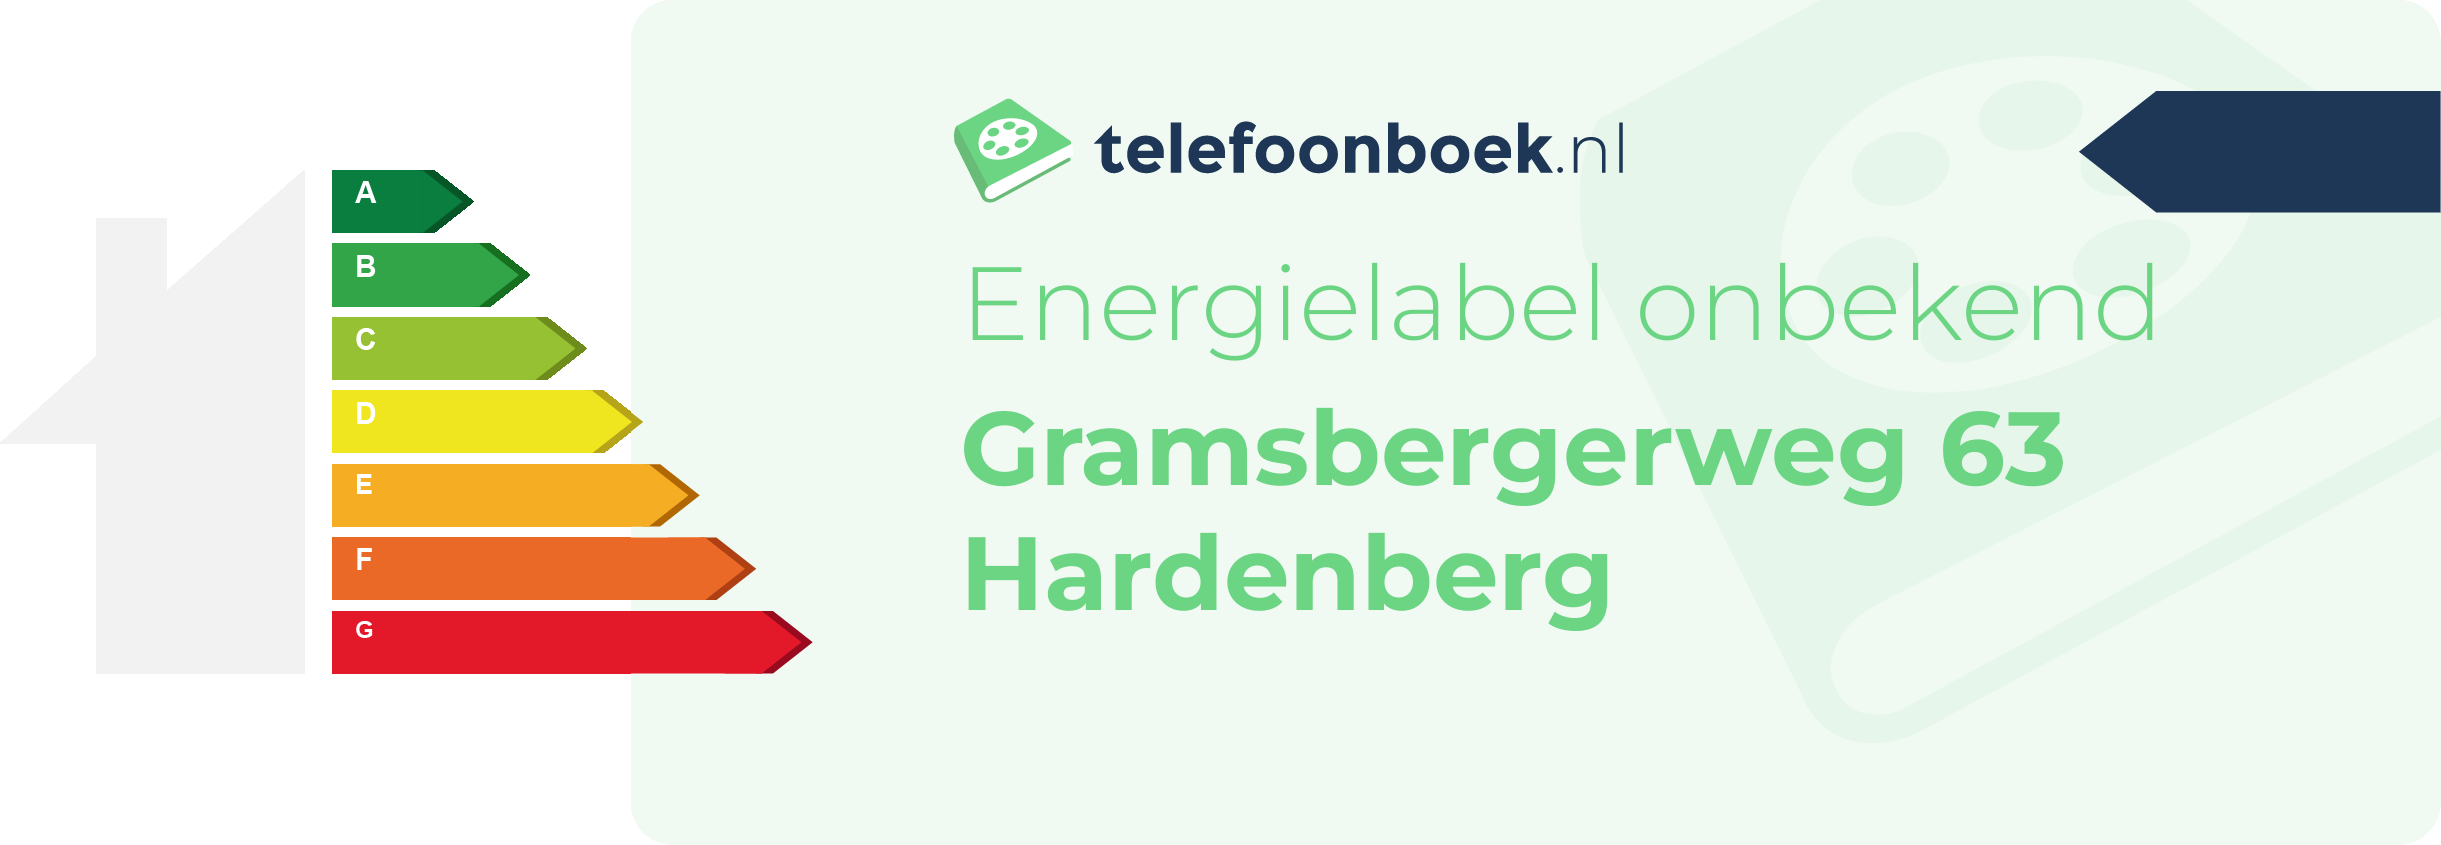 Energielabel Gramsbergerweg 63 Hardenberg